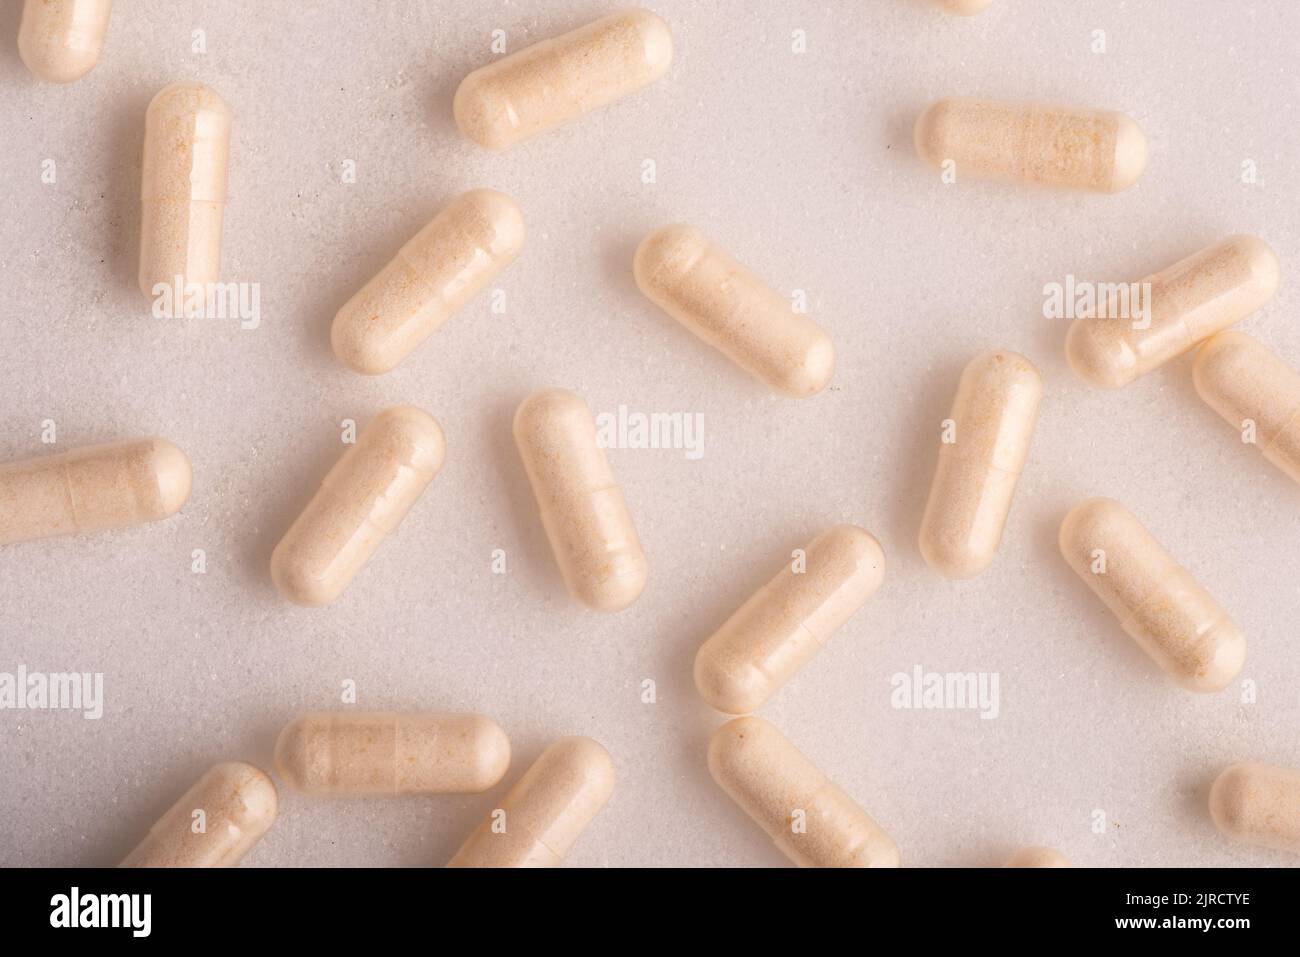 Vitamin pills on clean white background Stock Photo